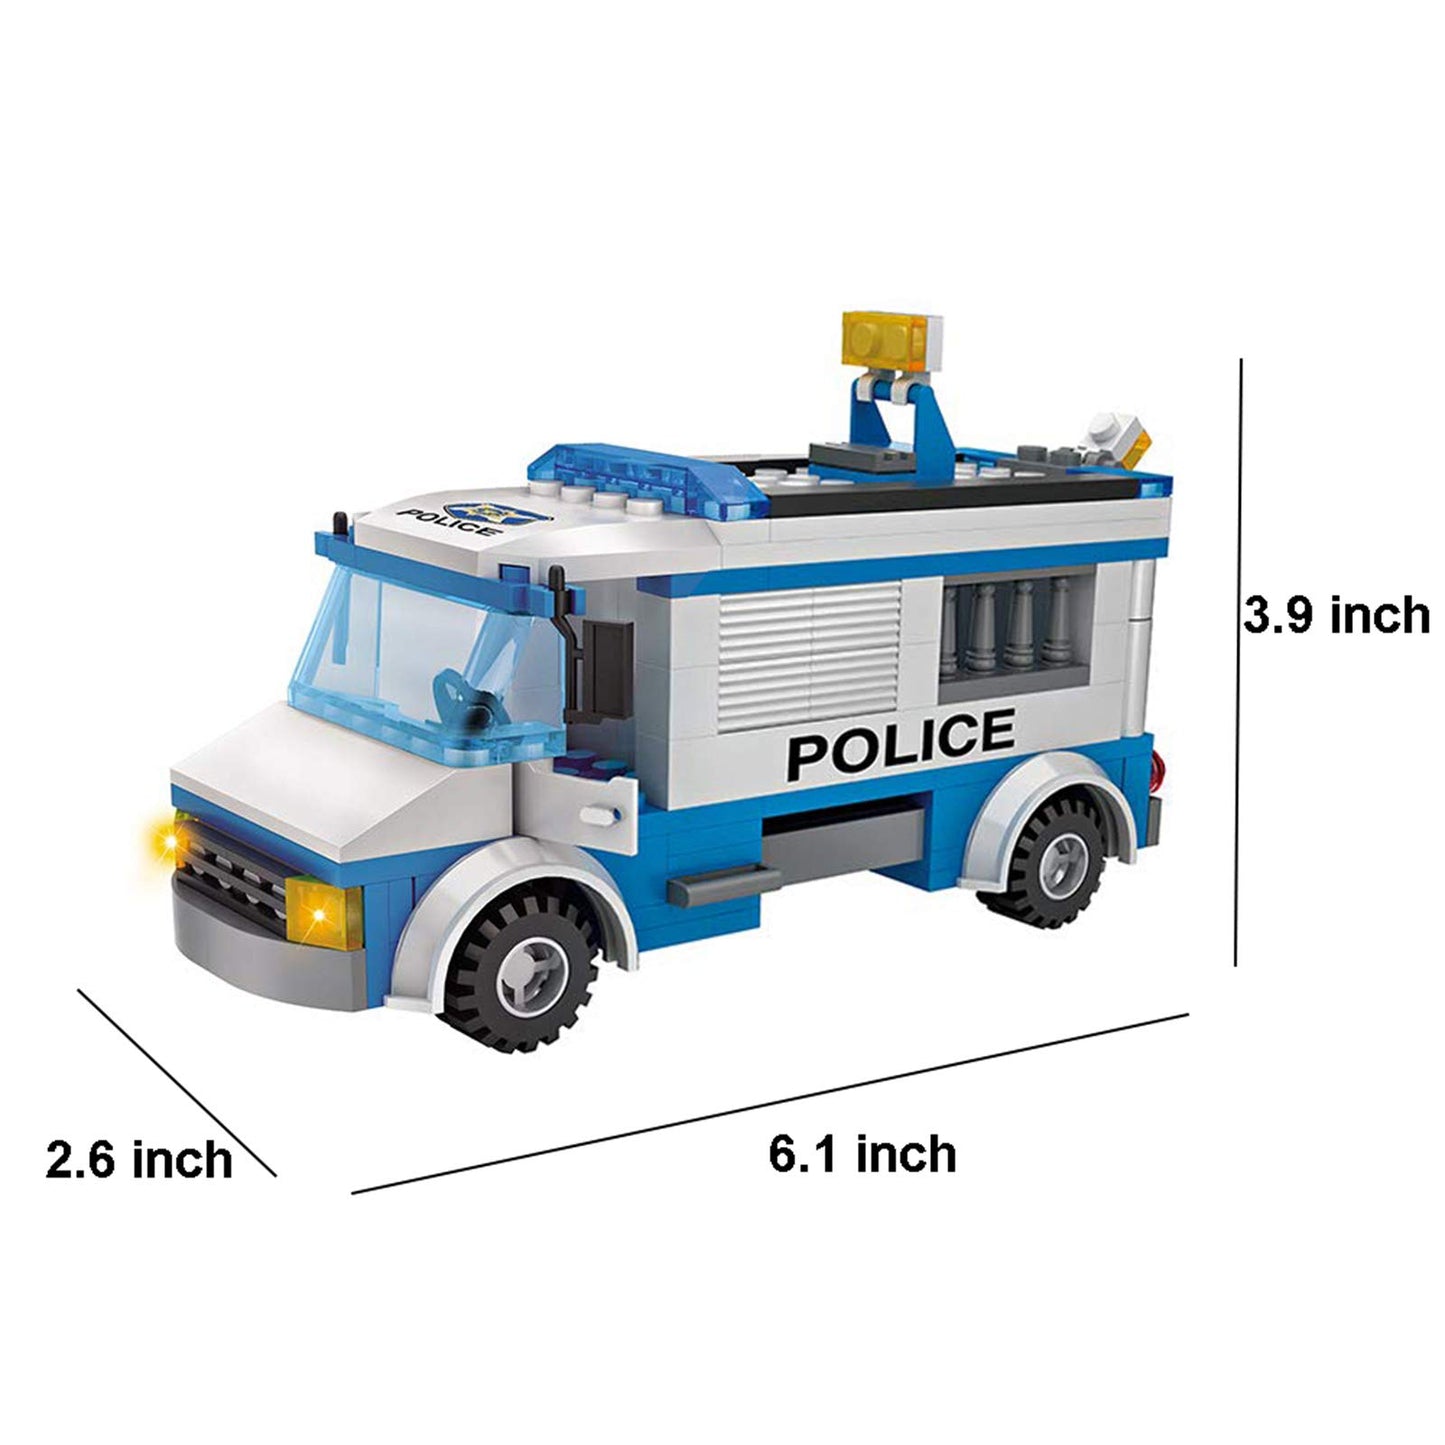 COGO MAN City Police Car Building Sets 194 Pieces Police Patrol Car Toys Cop Car Prisoner Transporter Building Kit for Boys and Girls Age 6 and up